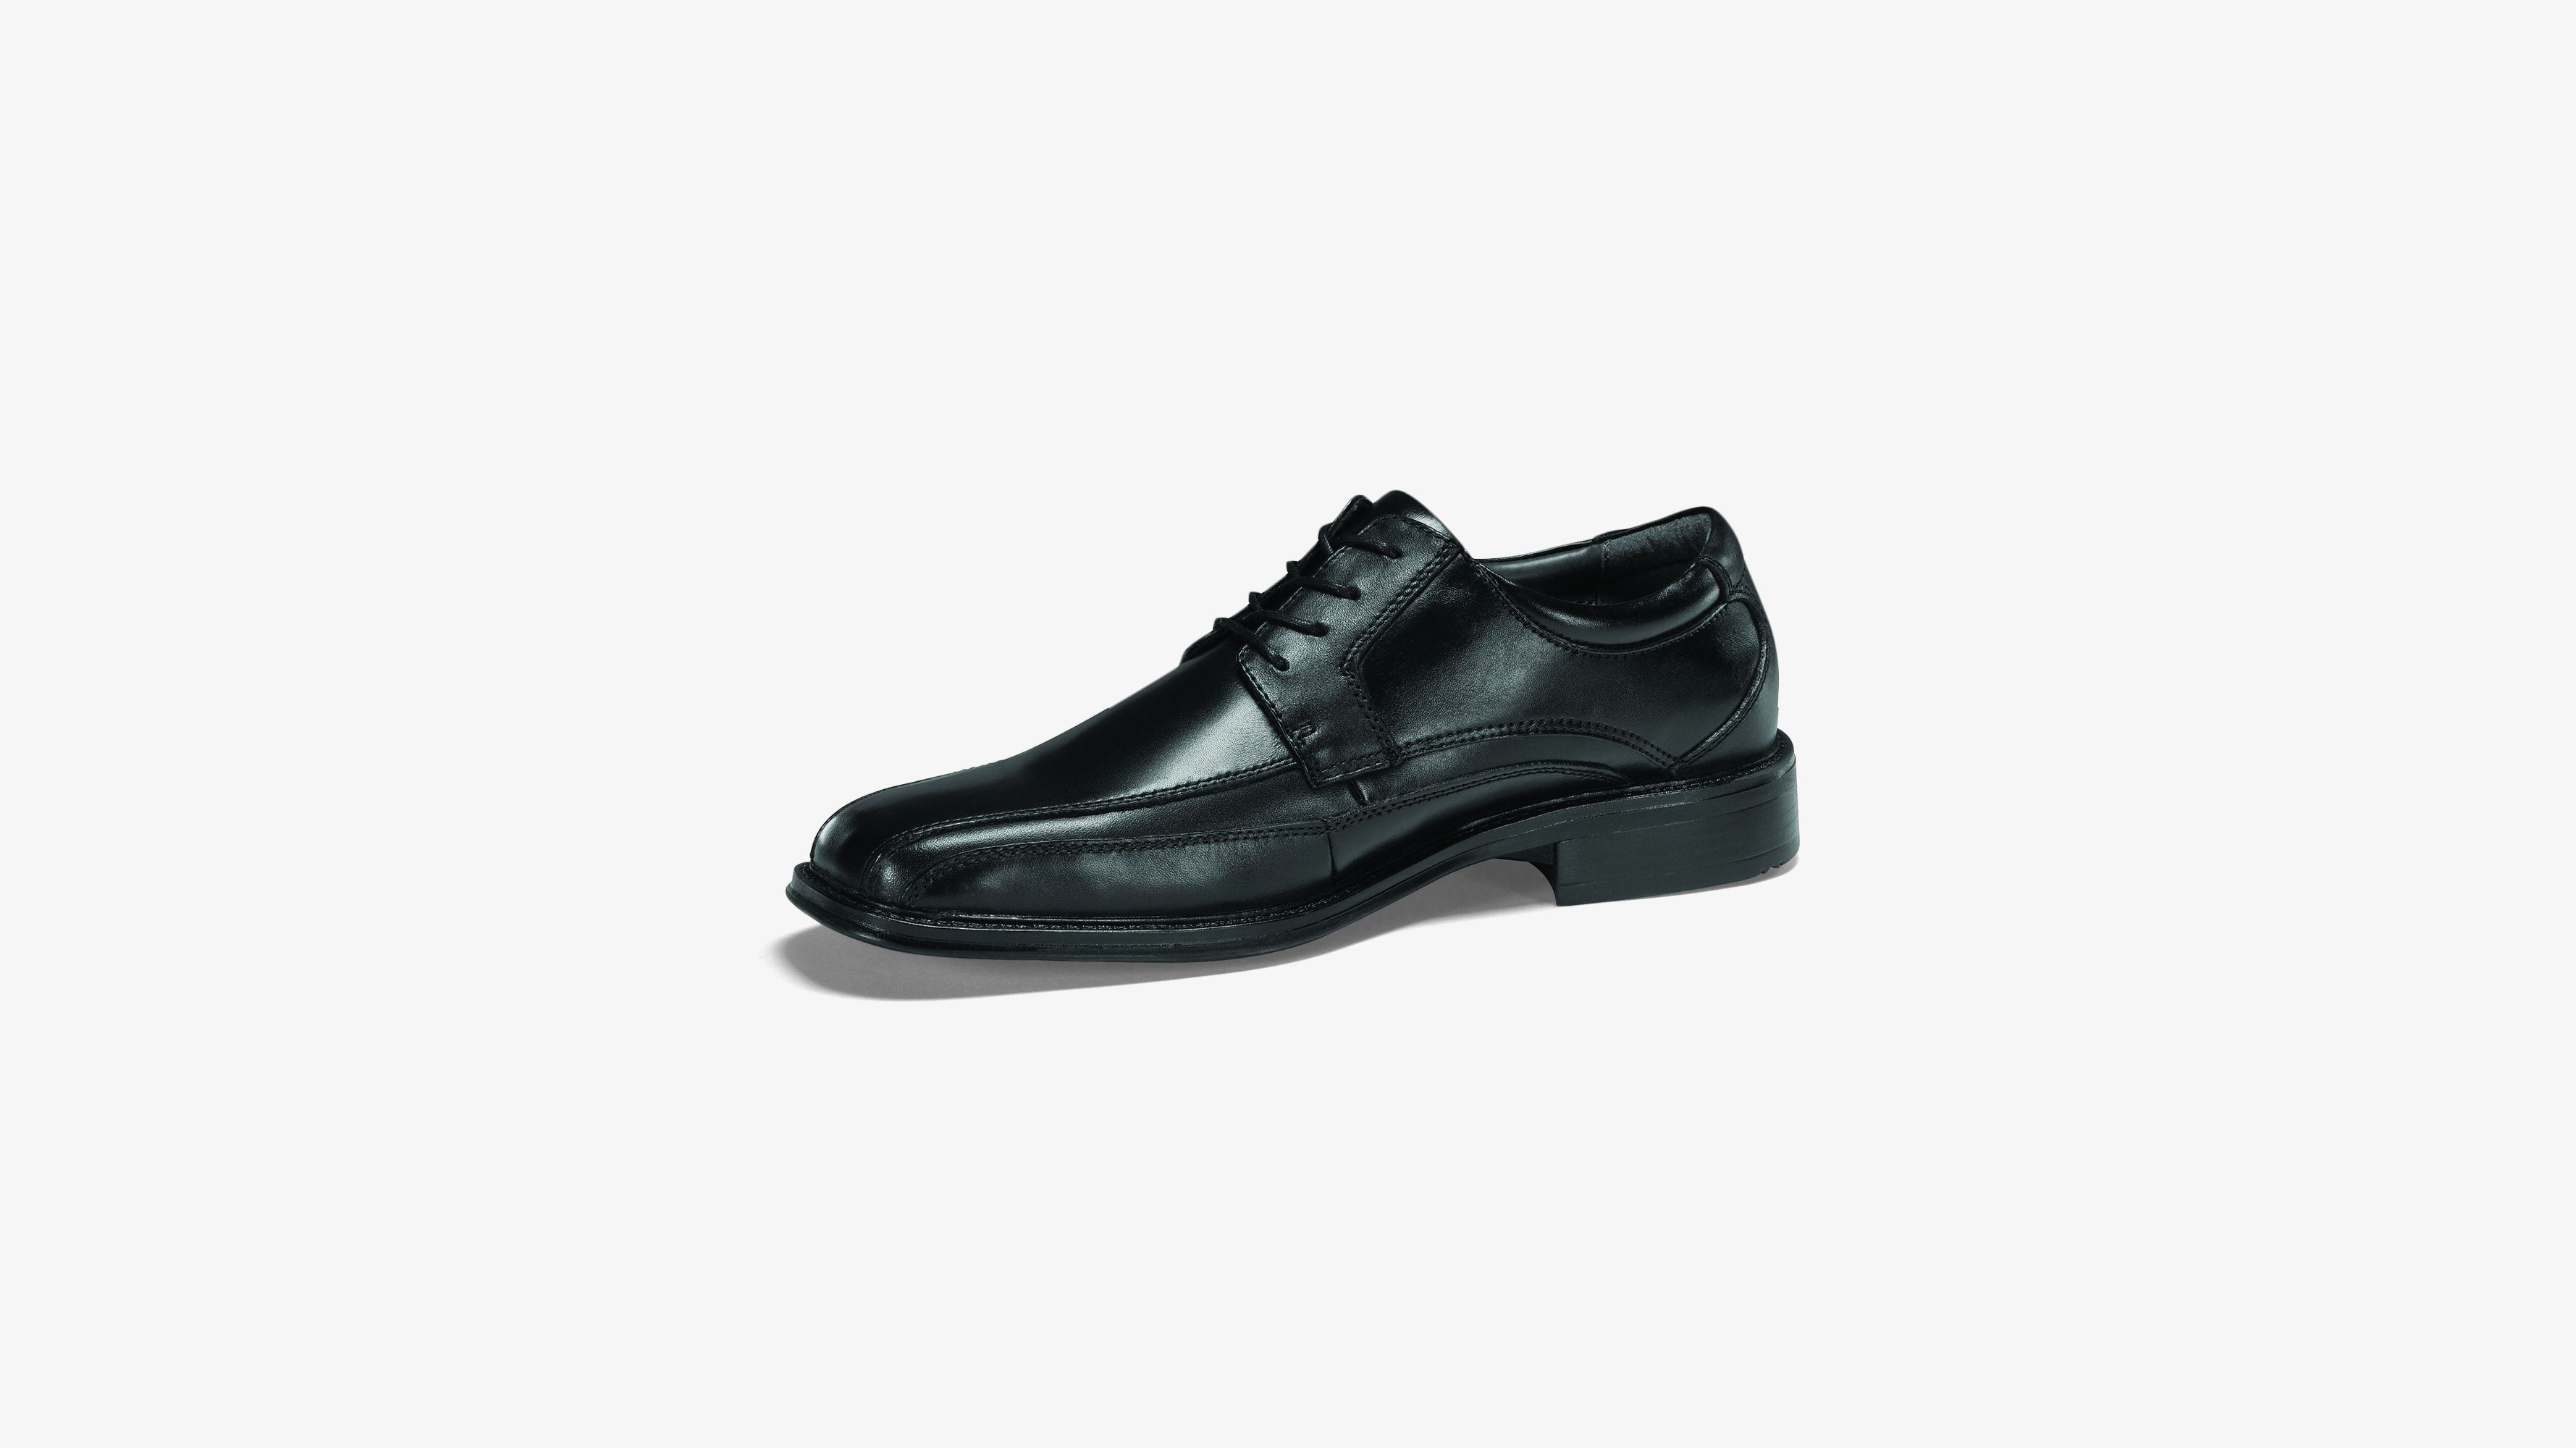 Endow Oxford Shoes - Black 927240001 